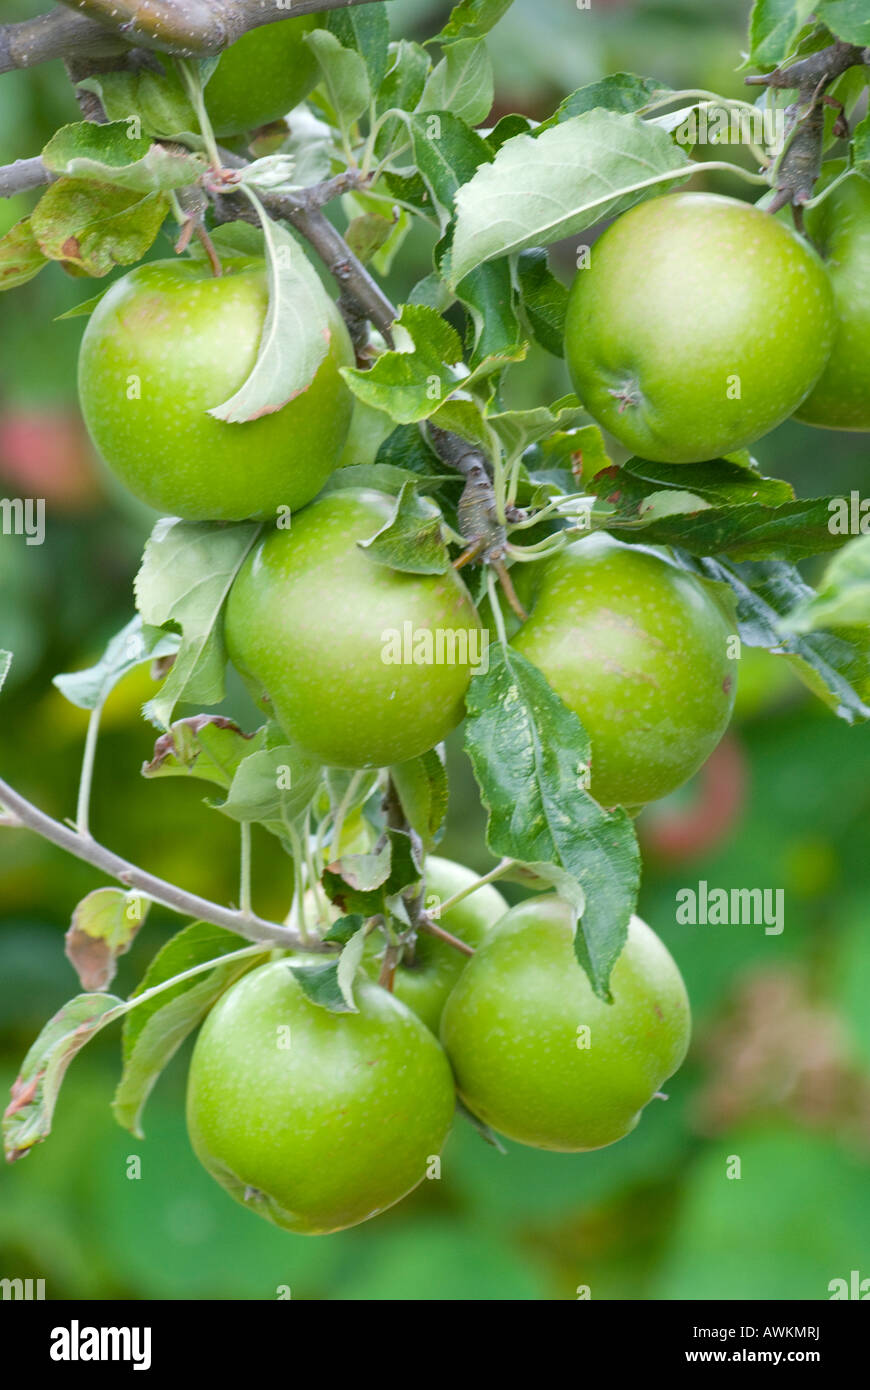 A laden bough of Granny Smith apples Stock Photo